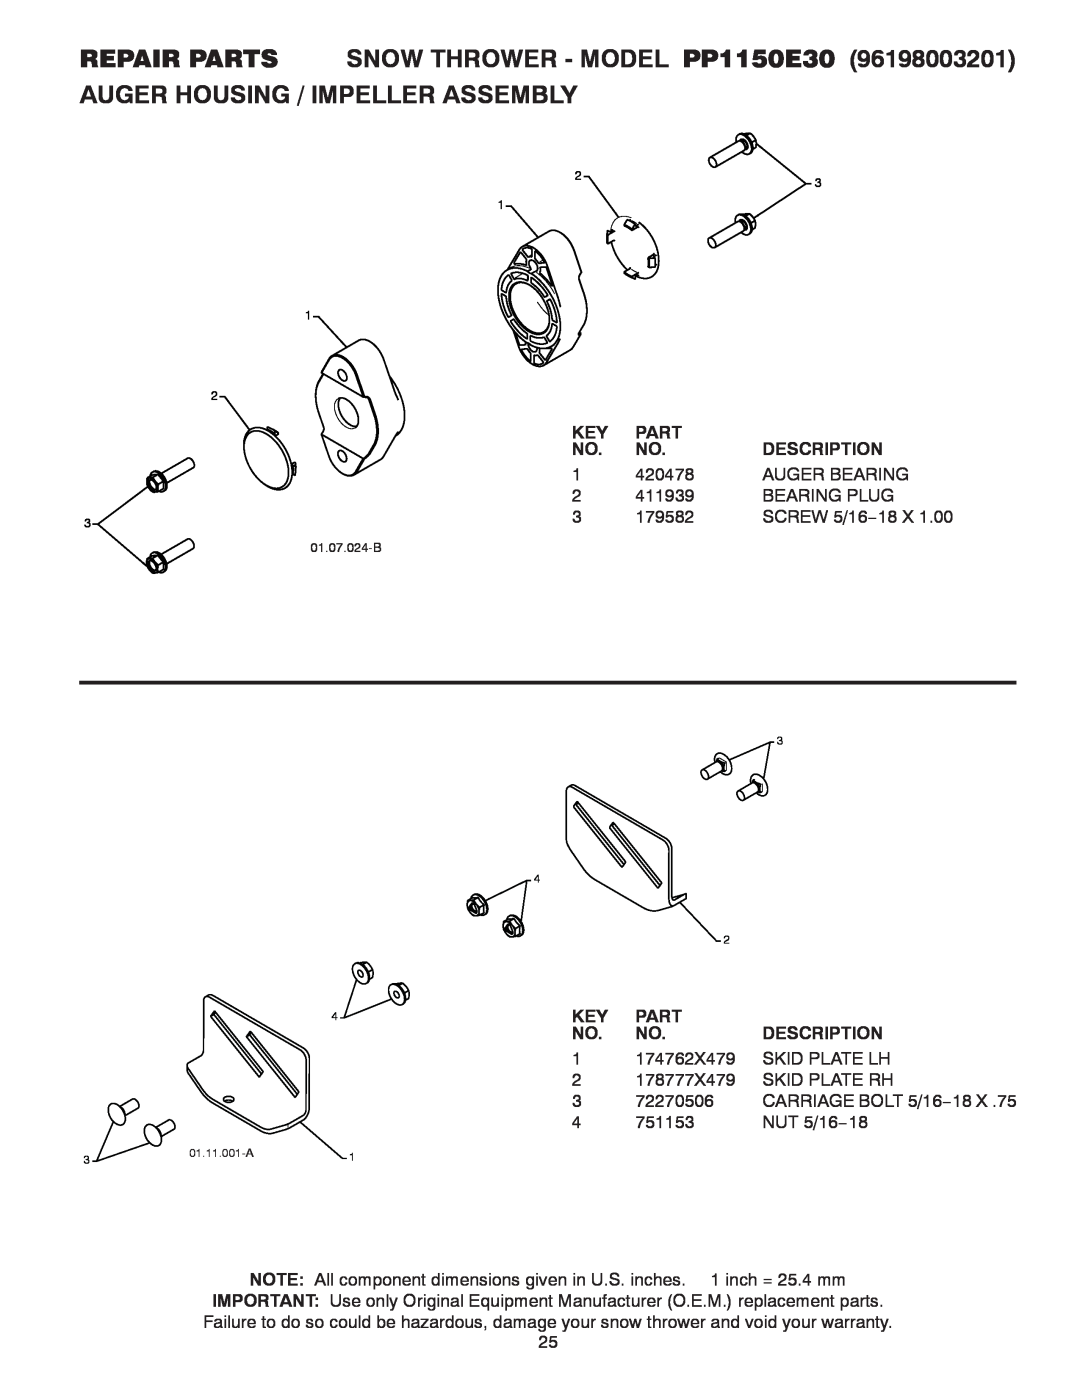 Poulan owner manual REPAIR PARTS SNOW THROWER - MODEL PP1150E30, Auger Housing / Impeller Assembly, Part, Description 